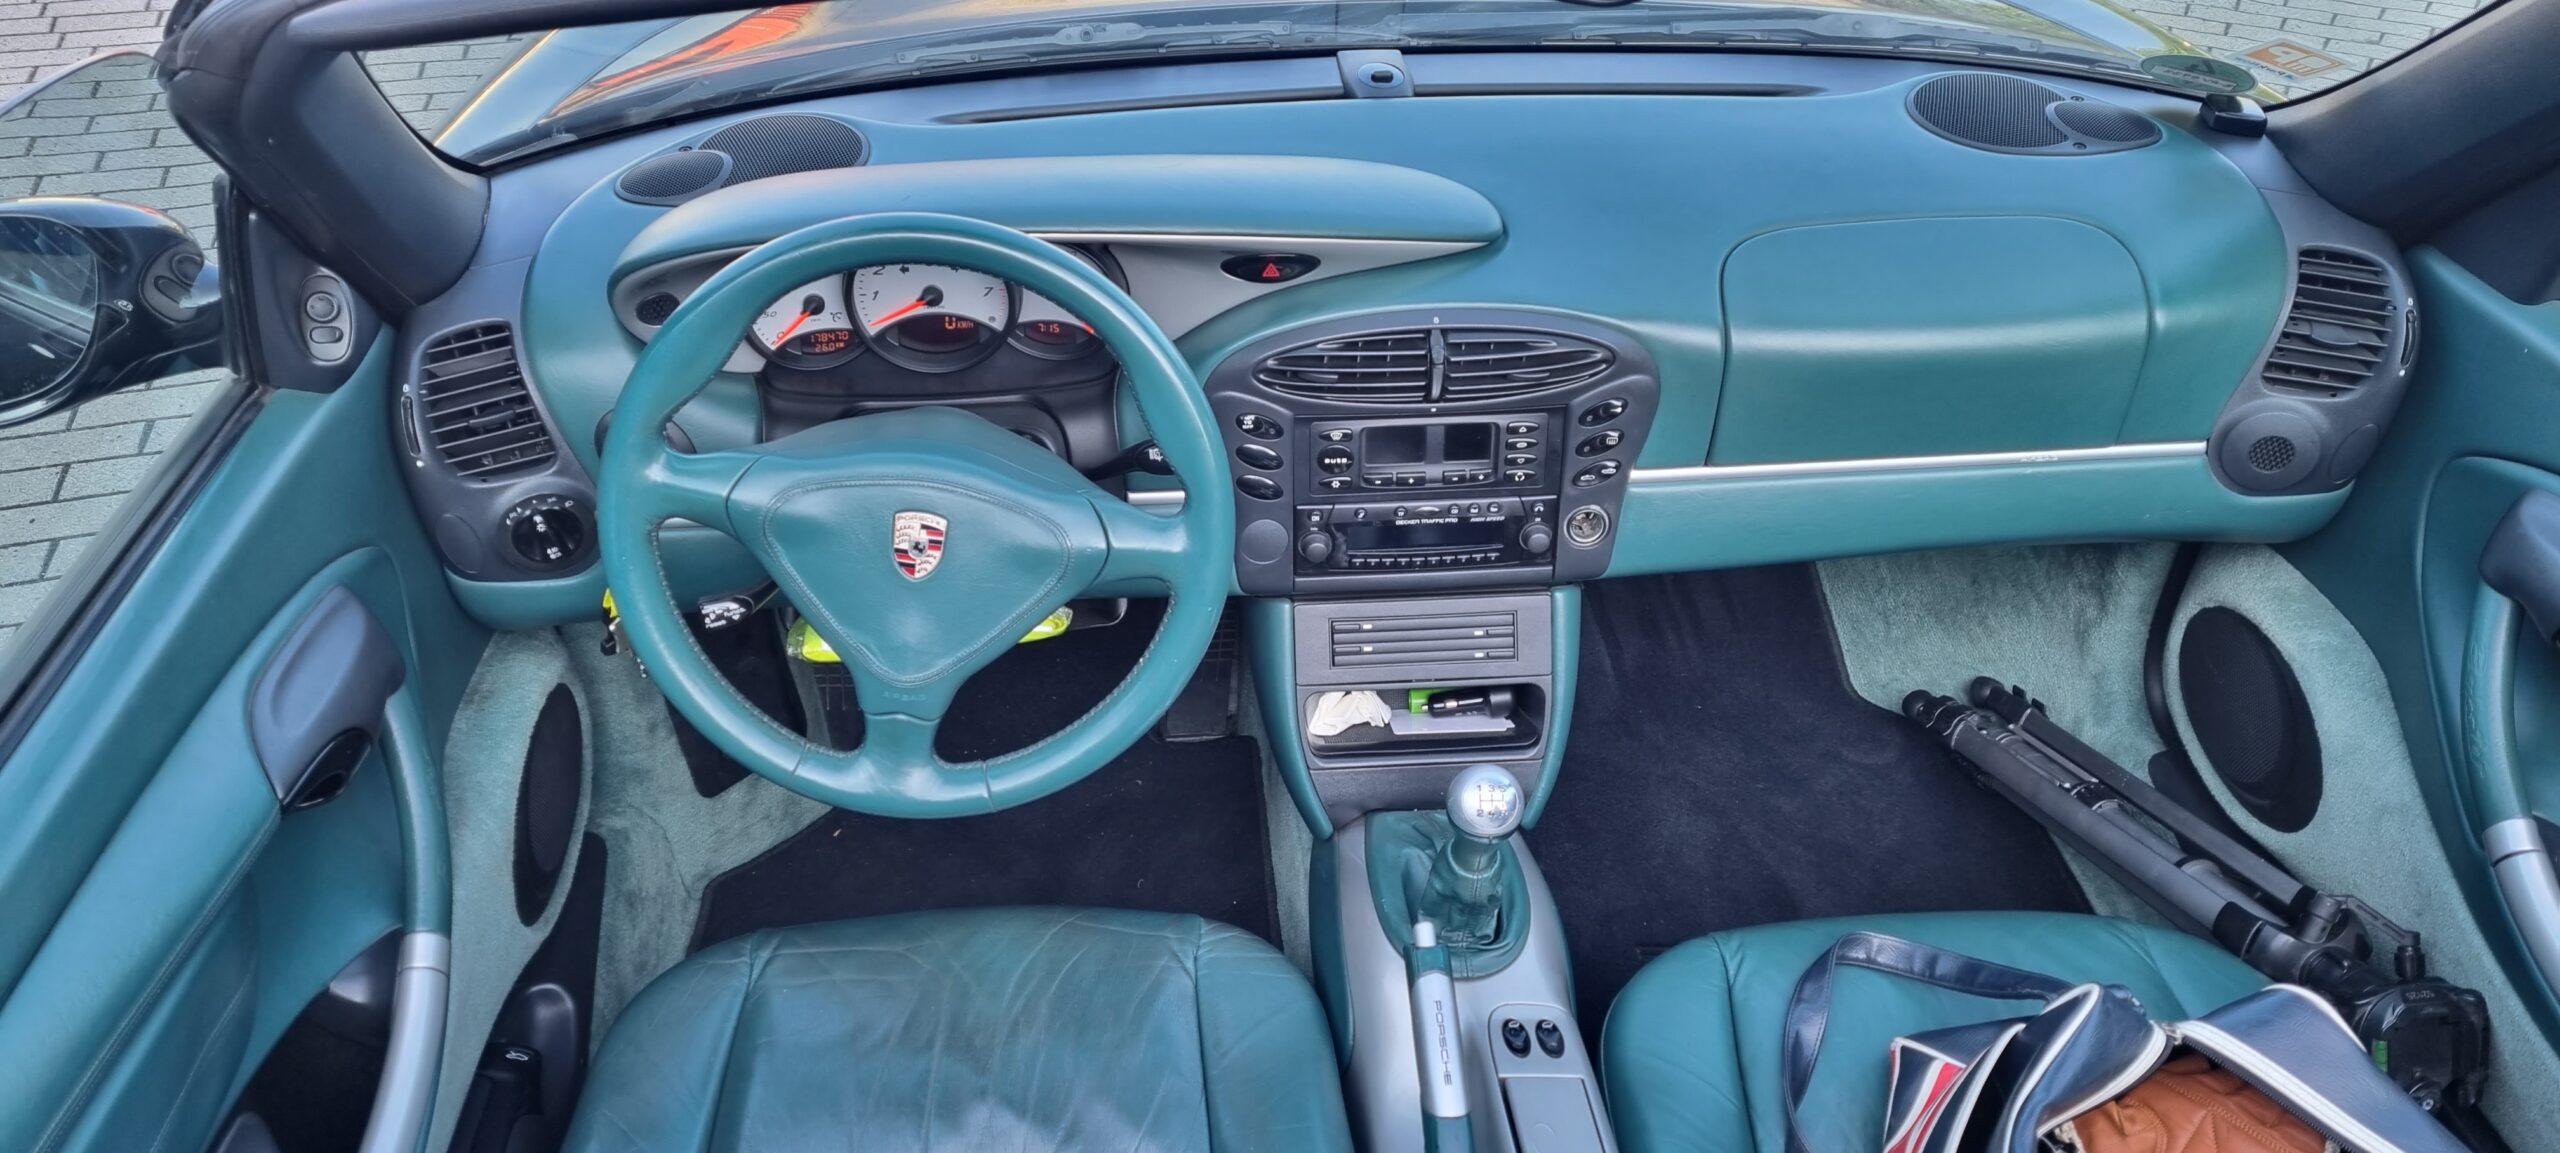 Porsche Boxster 986 Interior Petroleum Color